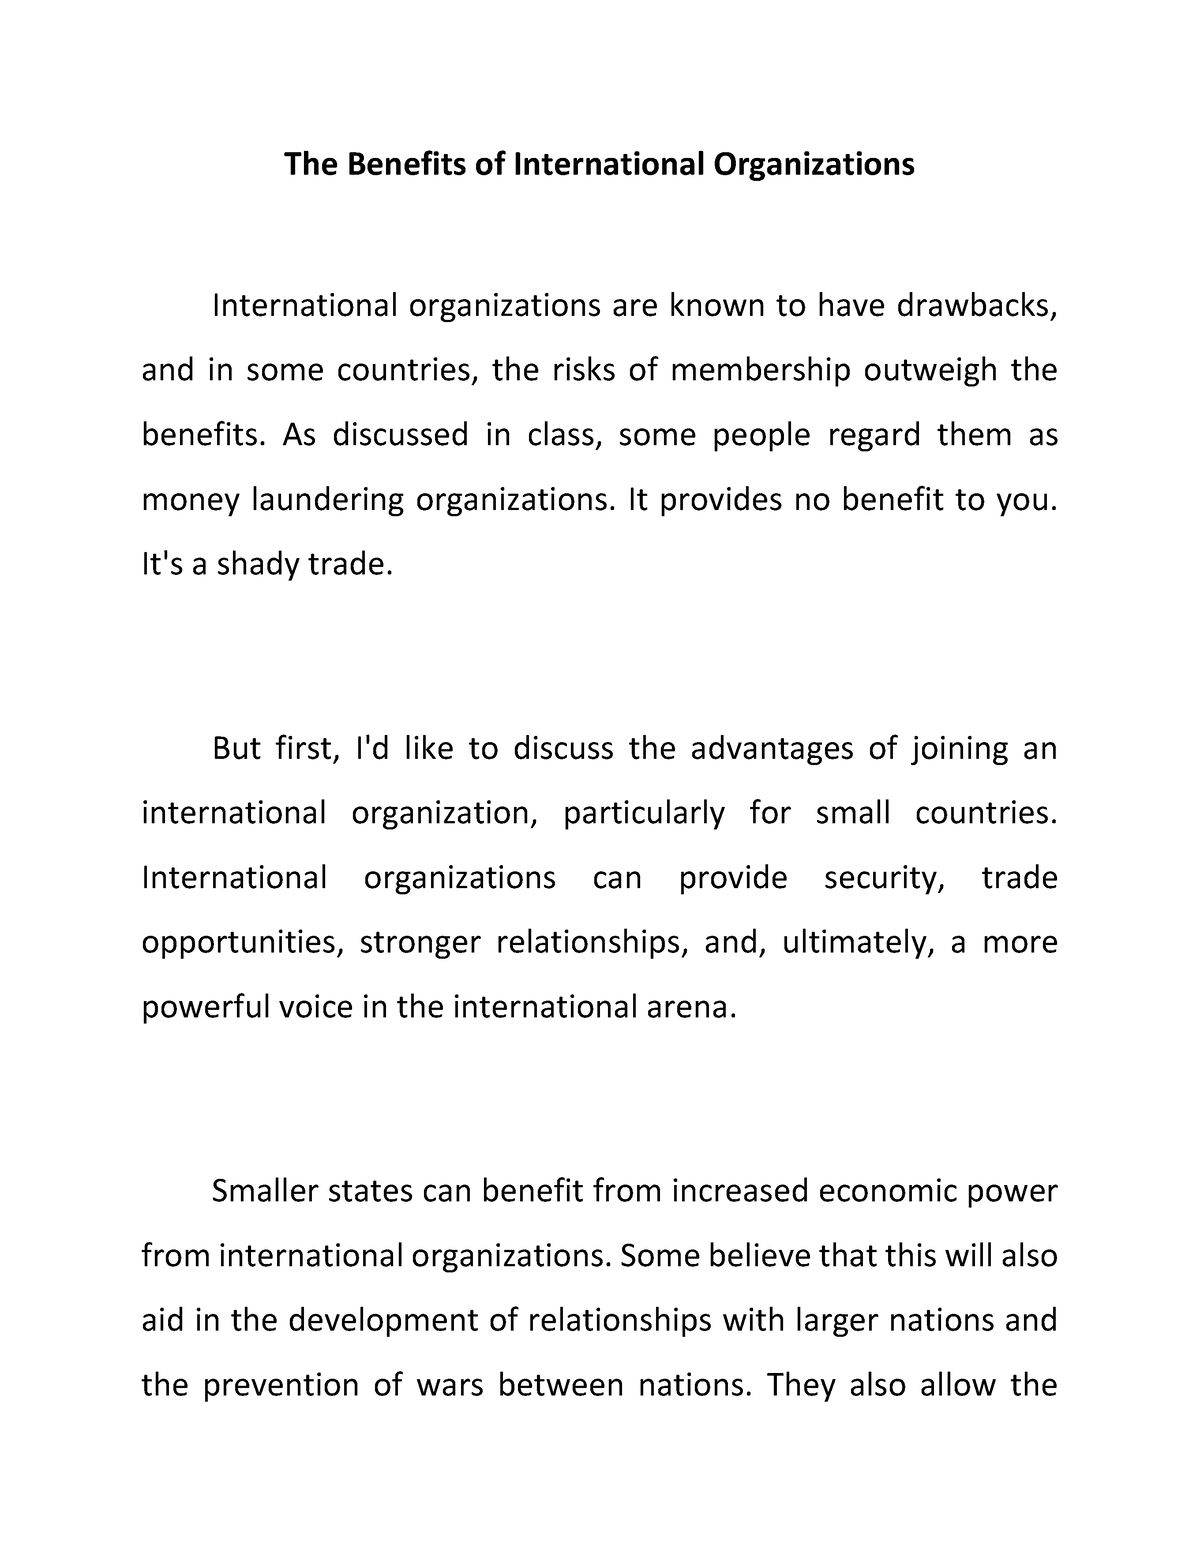 thesis on international organizations